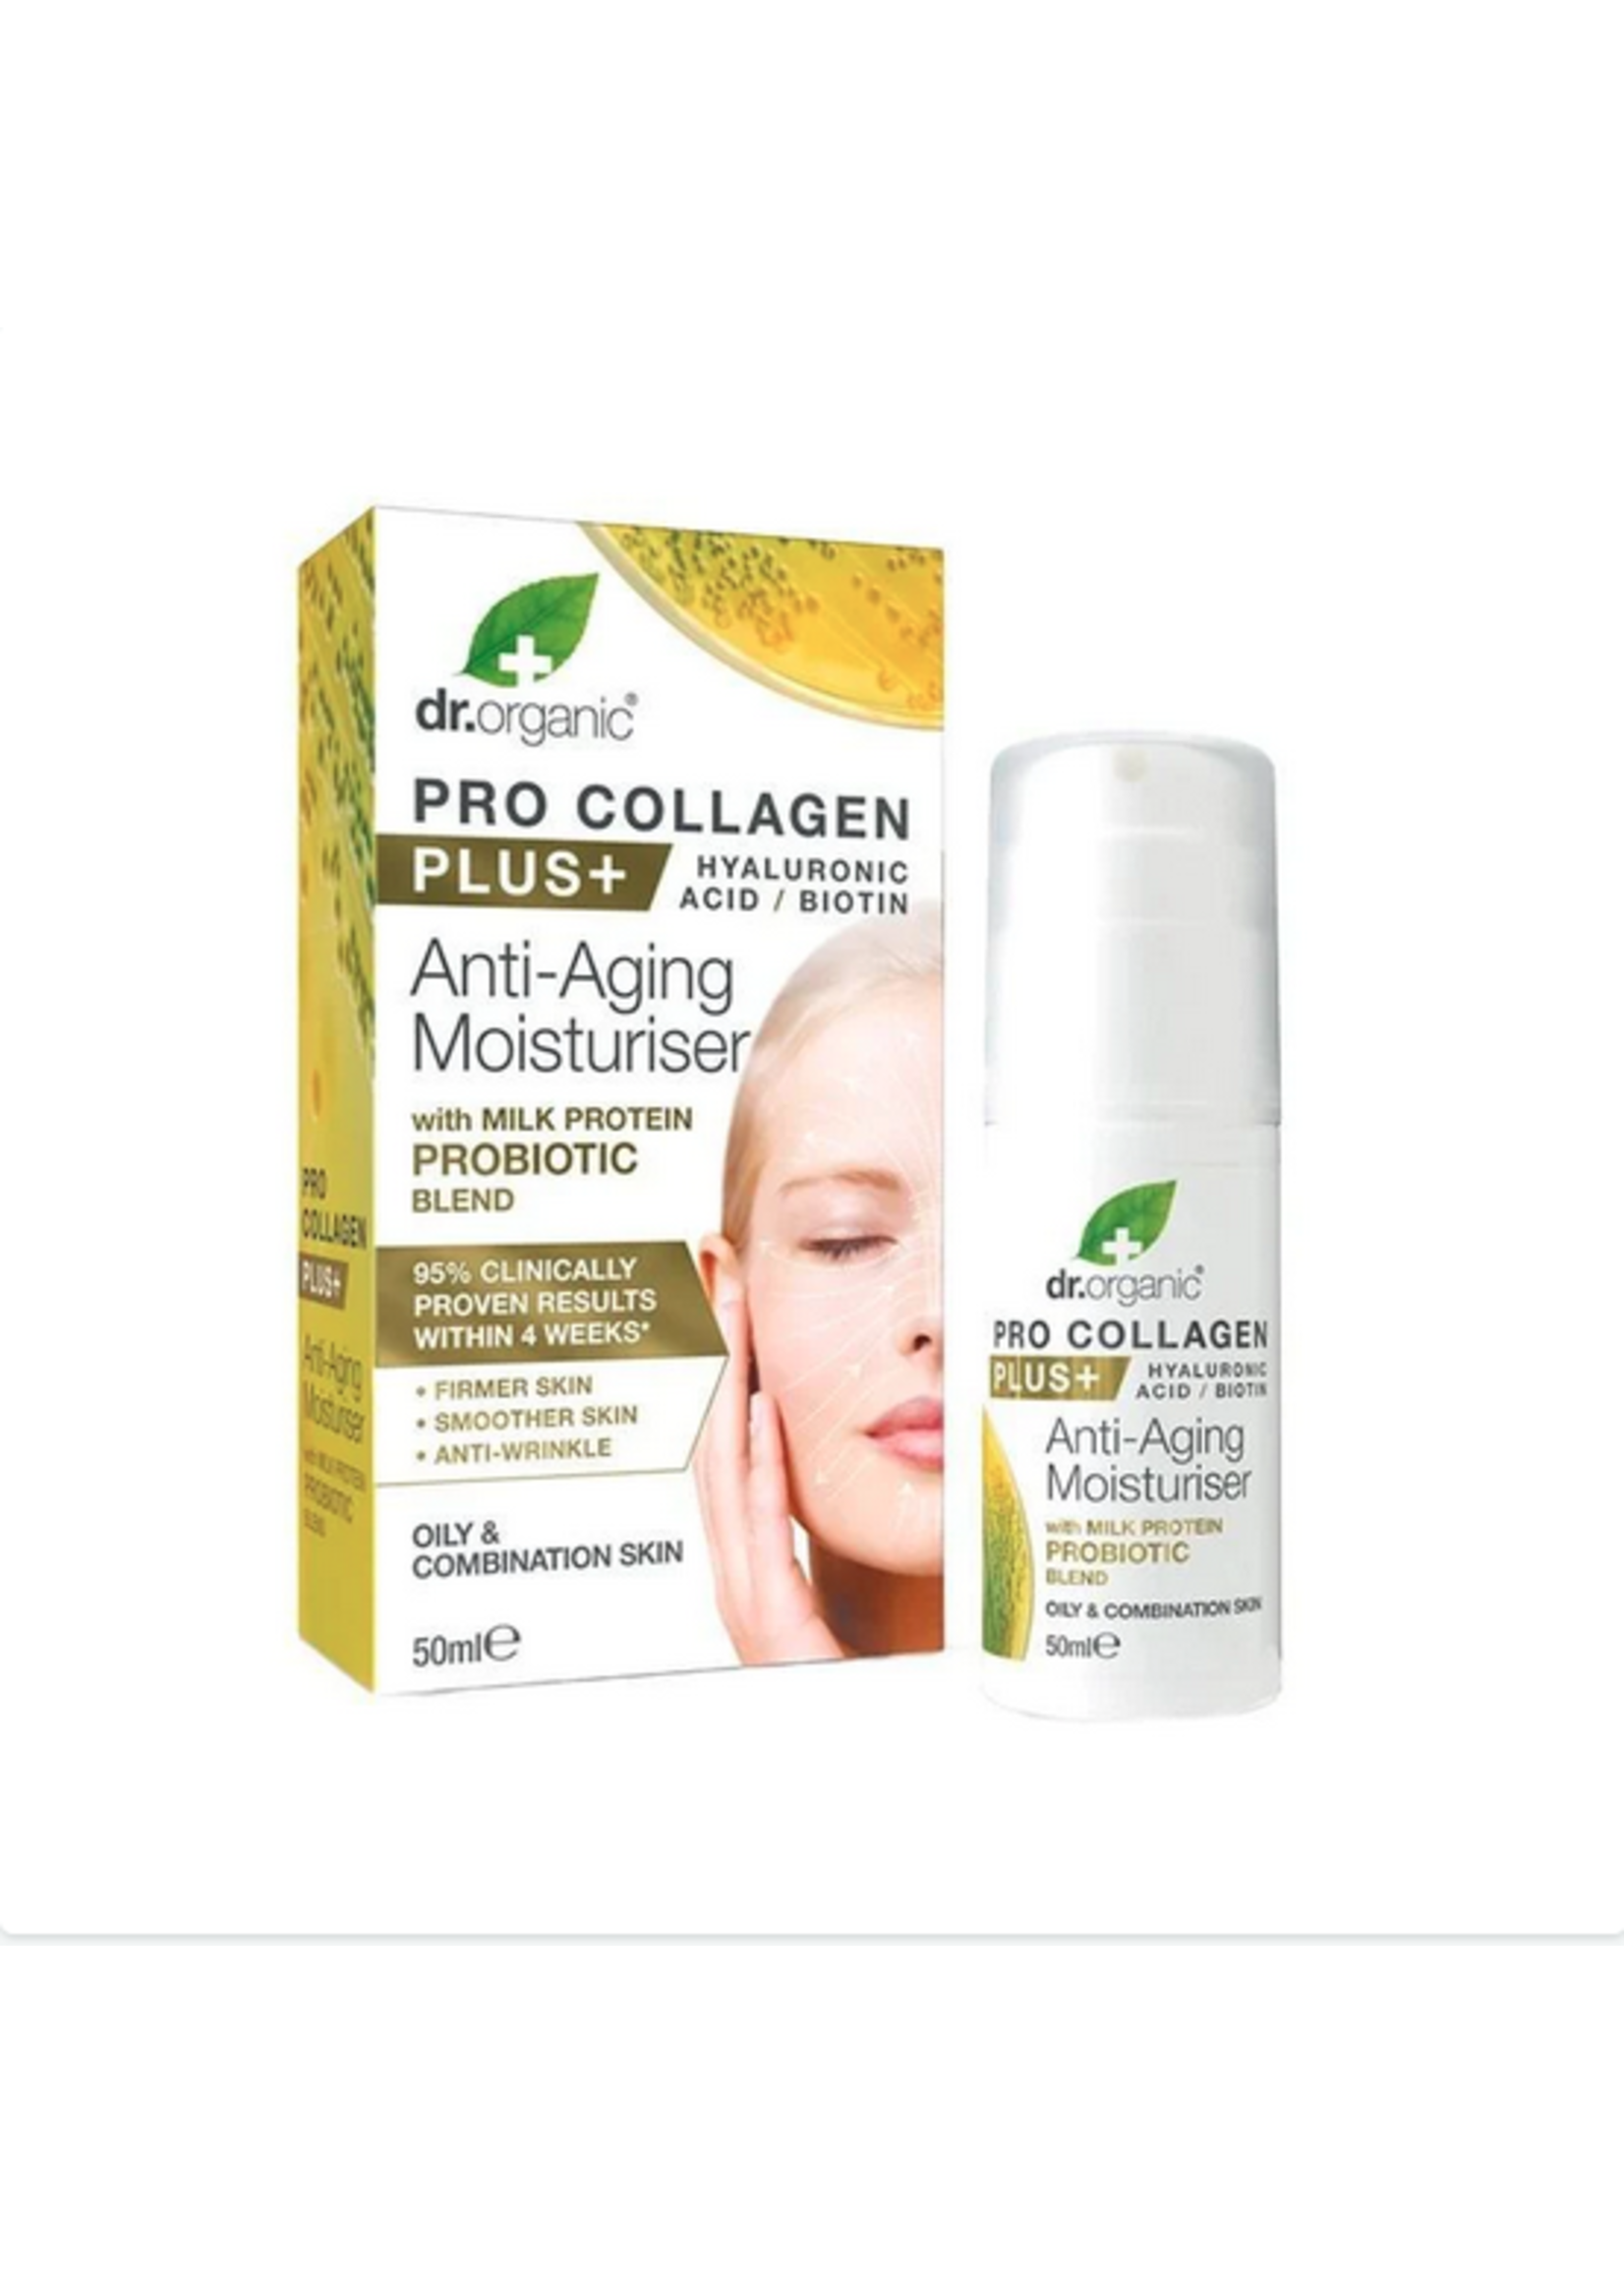 Dr Organic Dr Organic Pro Collagen Plus+ - Anti Aging Moisturiser with Probiotic 50ml